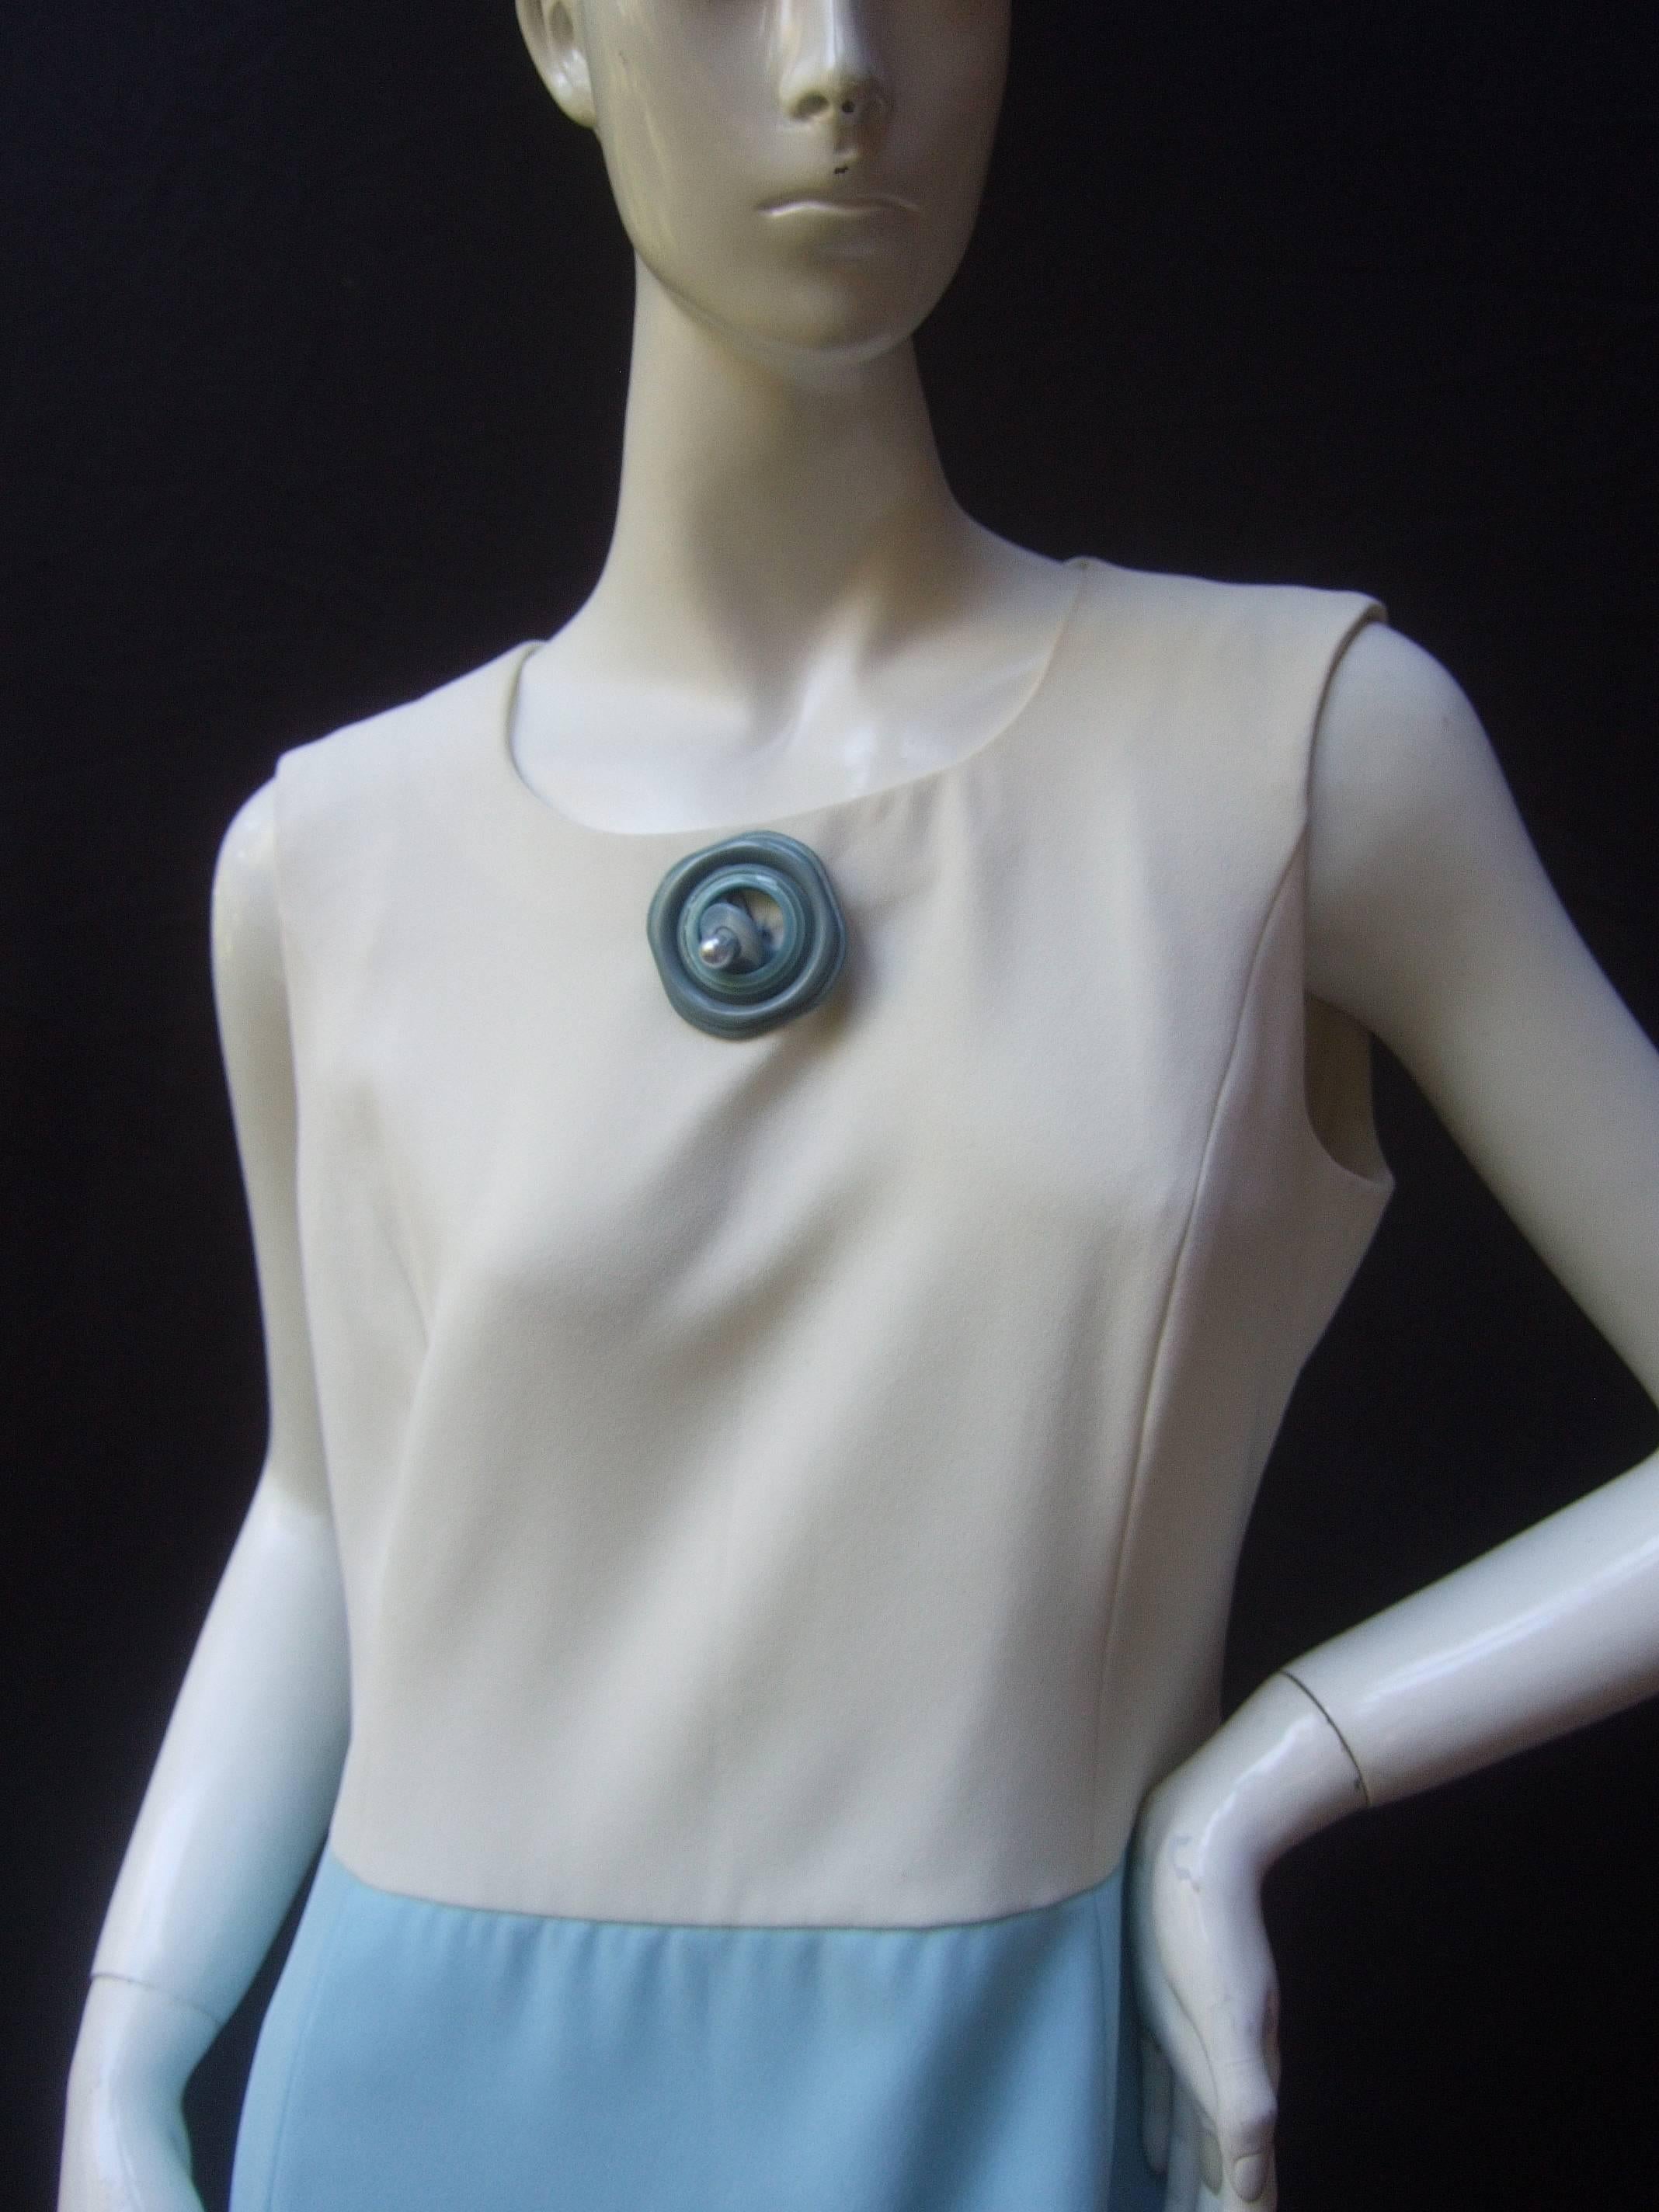 Blue Pierre Cardin Mod White & Turquoise Sheath Dress c 1970